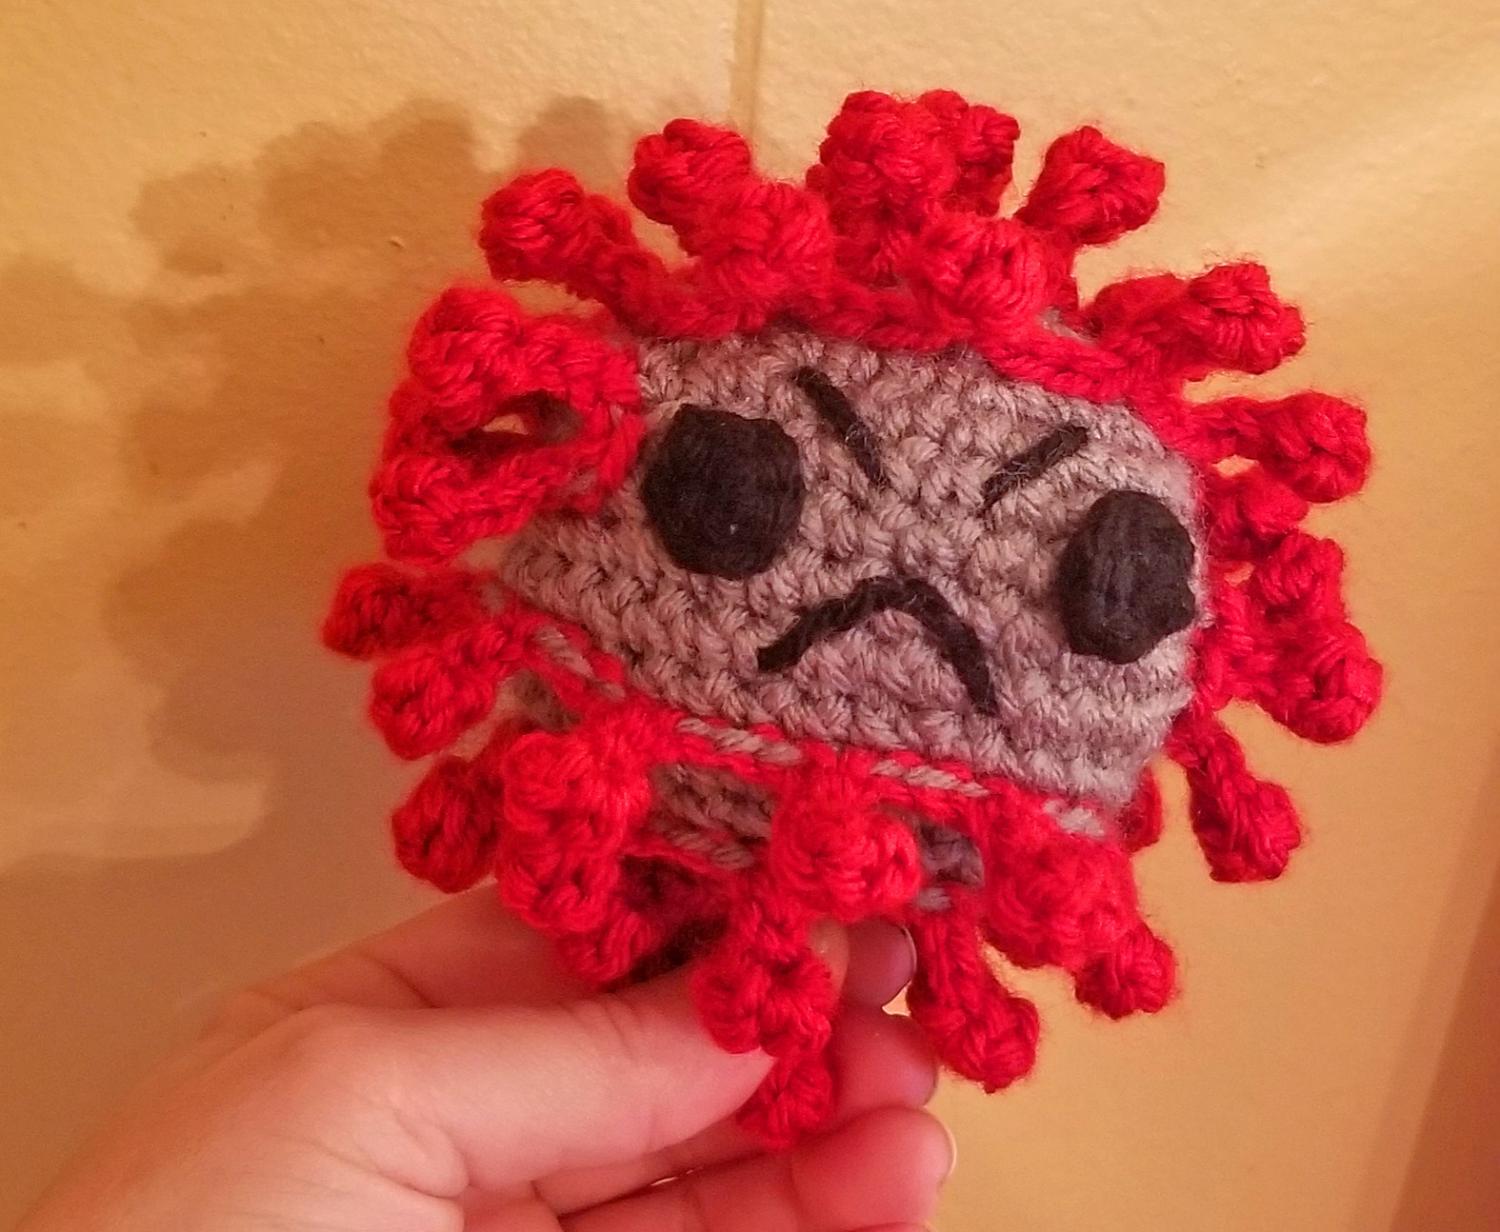 Crochet Coronavirus - Cute Funny Crochet Virus Free Pattern